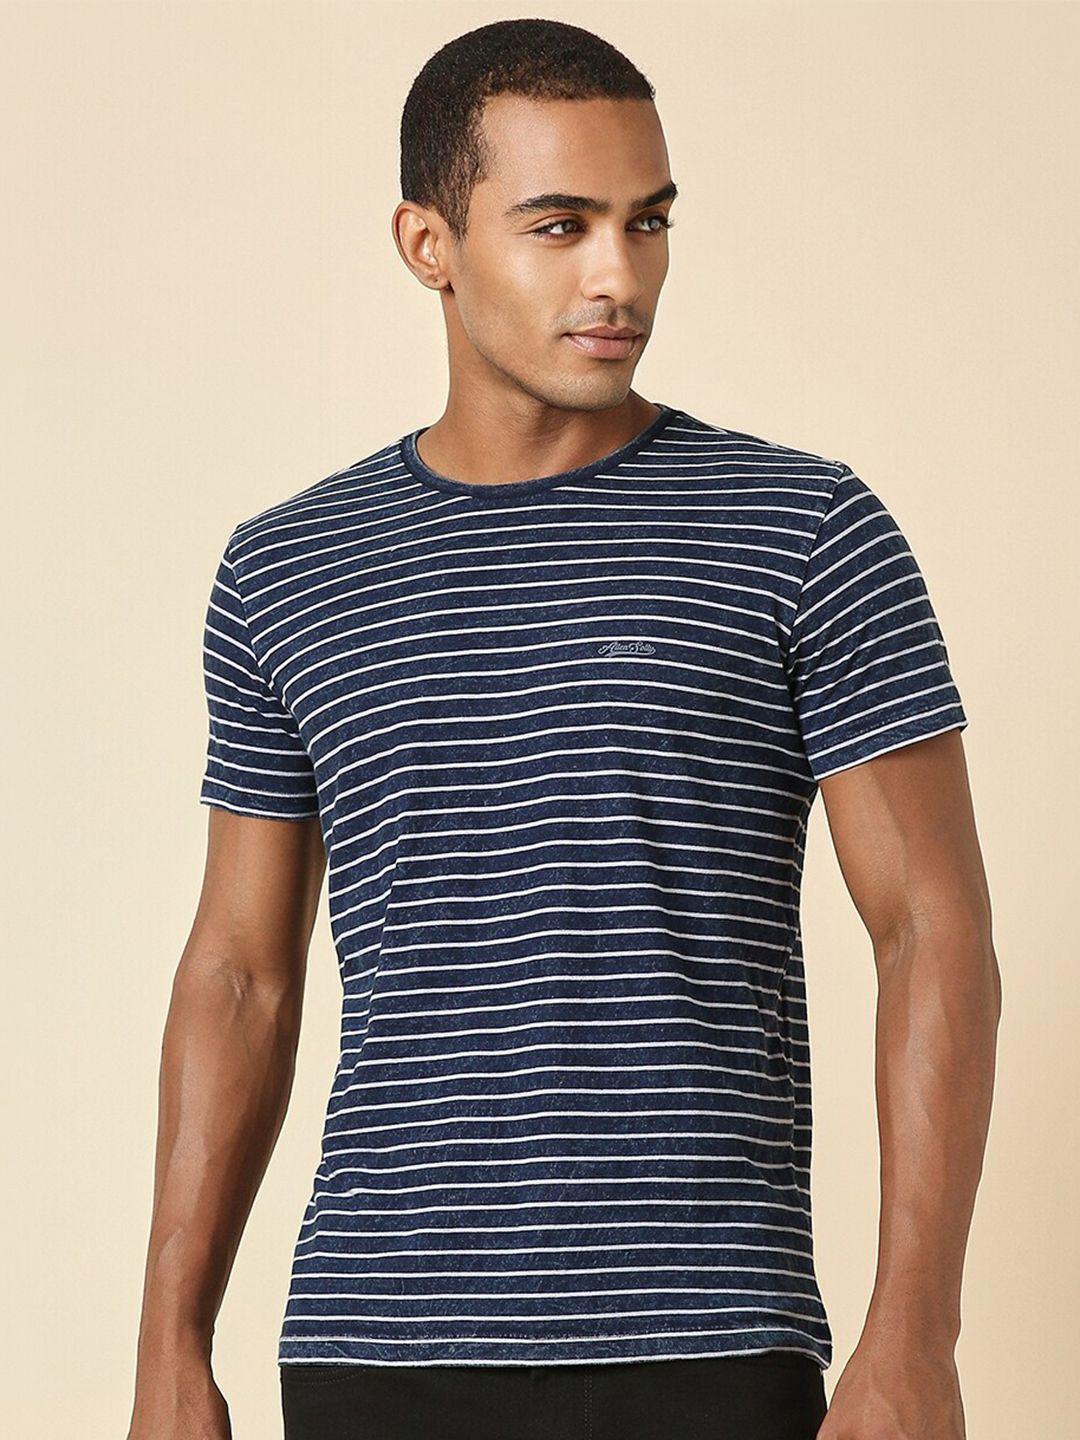 allen solly striped slim fit pure cotton t-shirt